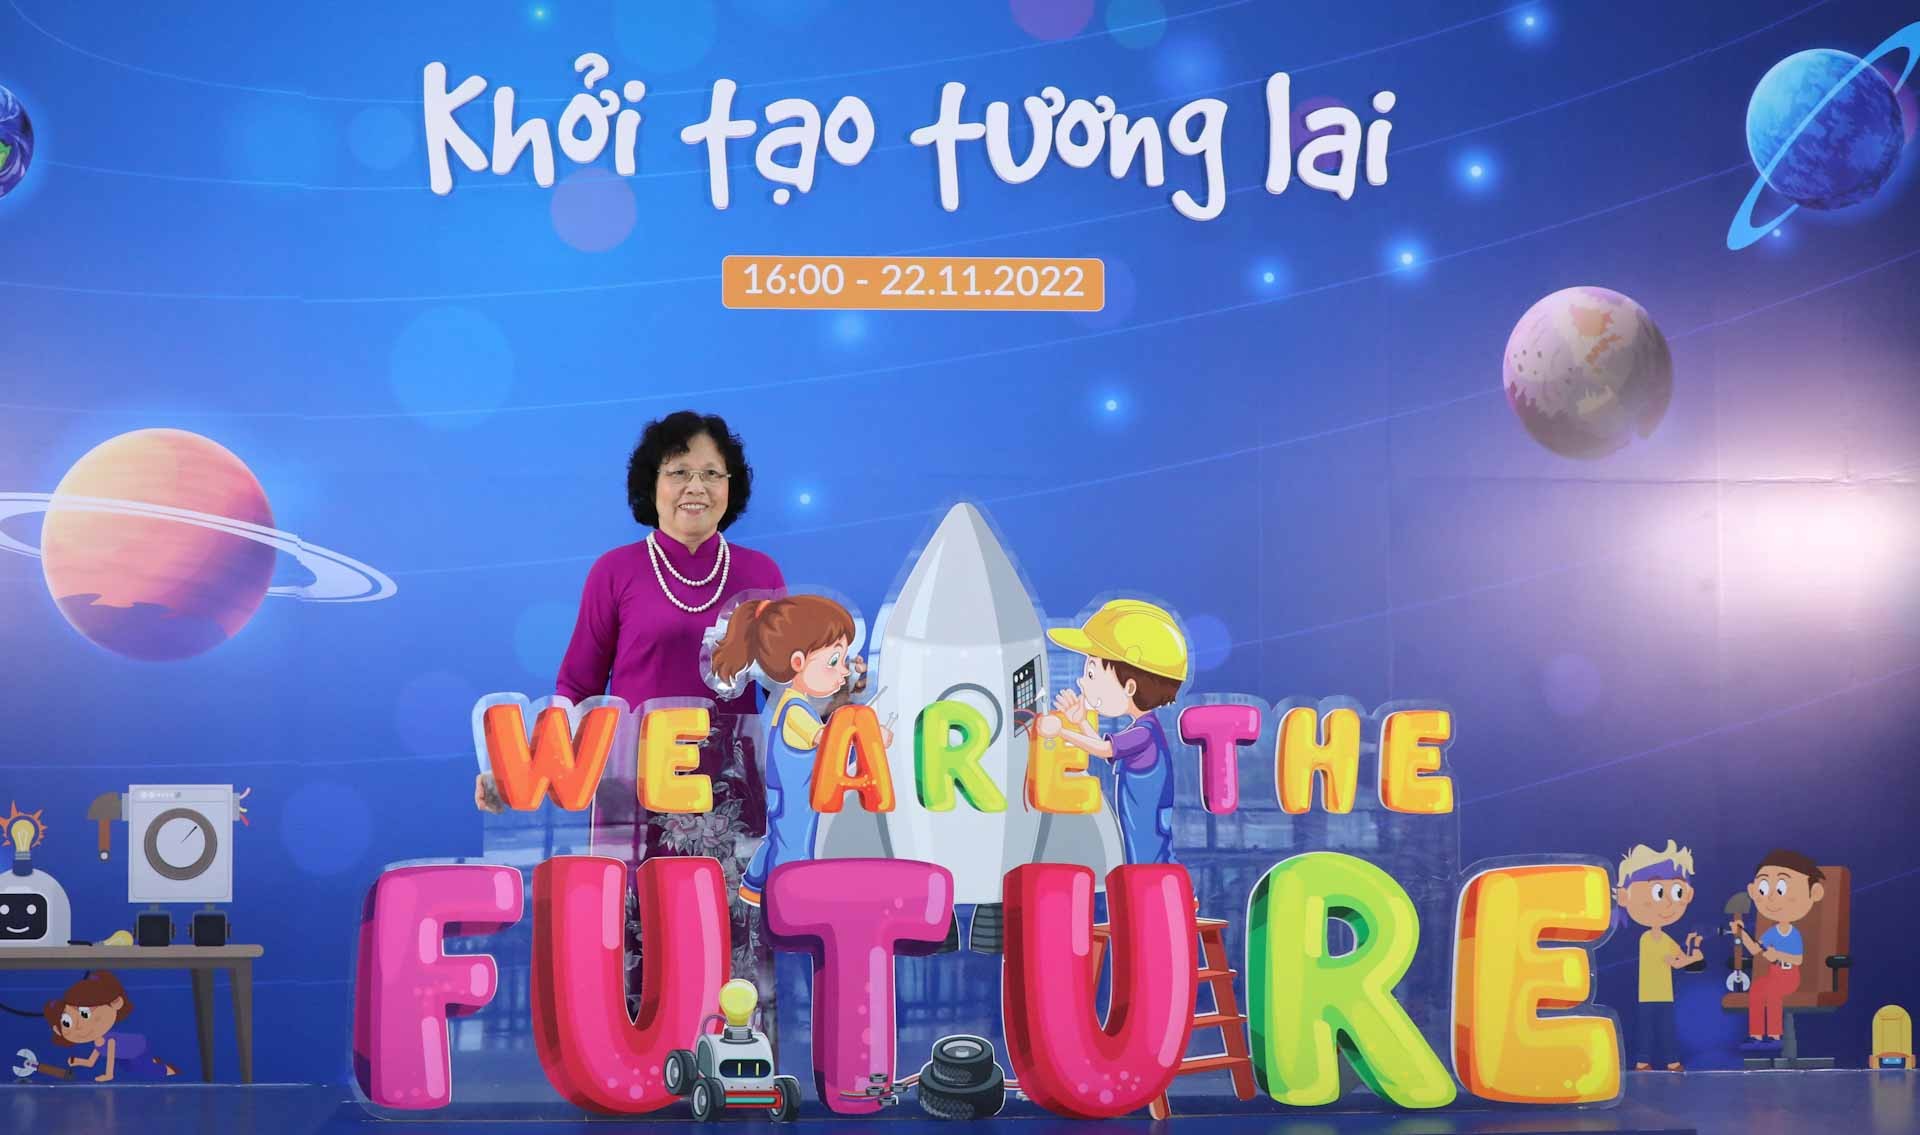 we-are-the-future-dai-nhac-hoi-lon-nhat-viet-nam-danh-cho-thieu-nhi-dulichgiaitri-1669471977.jpg